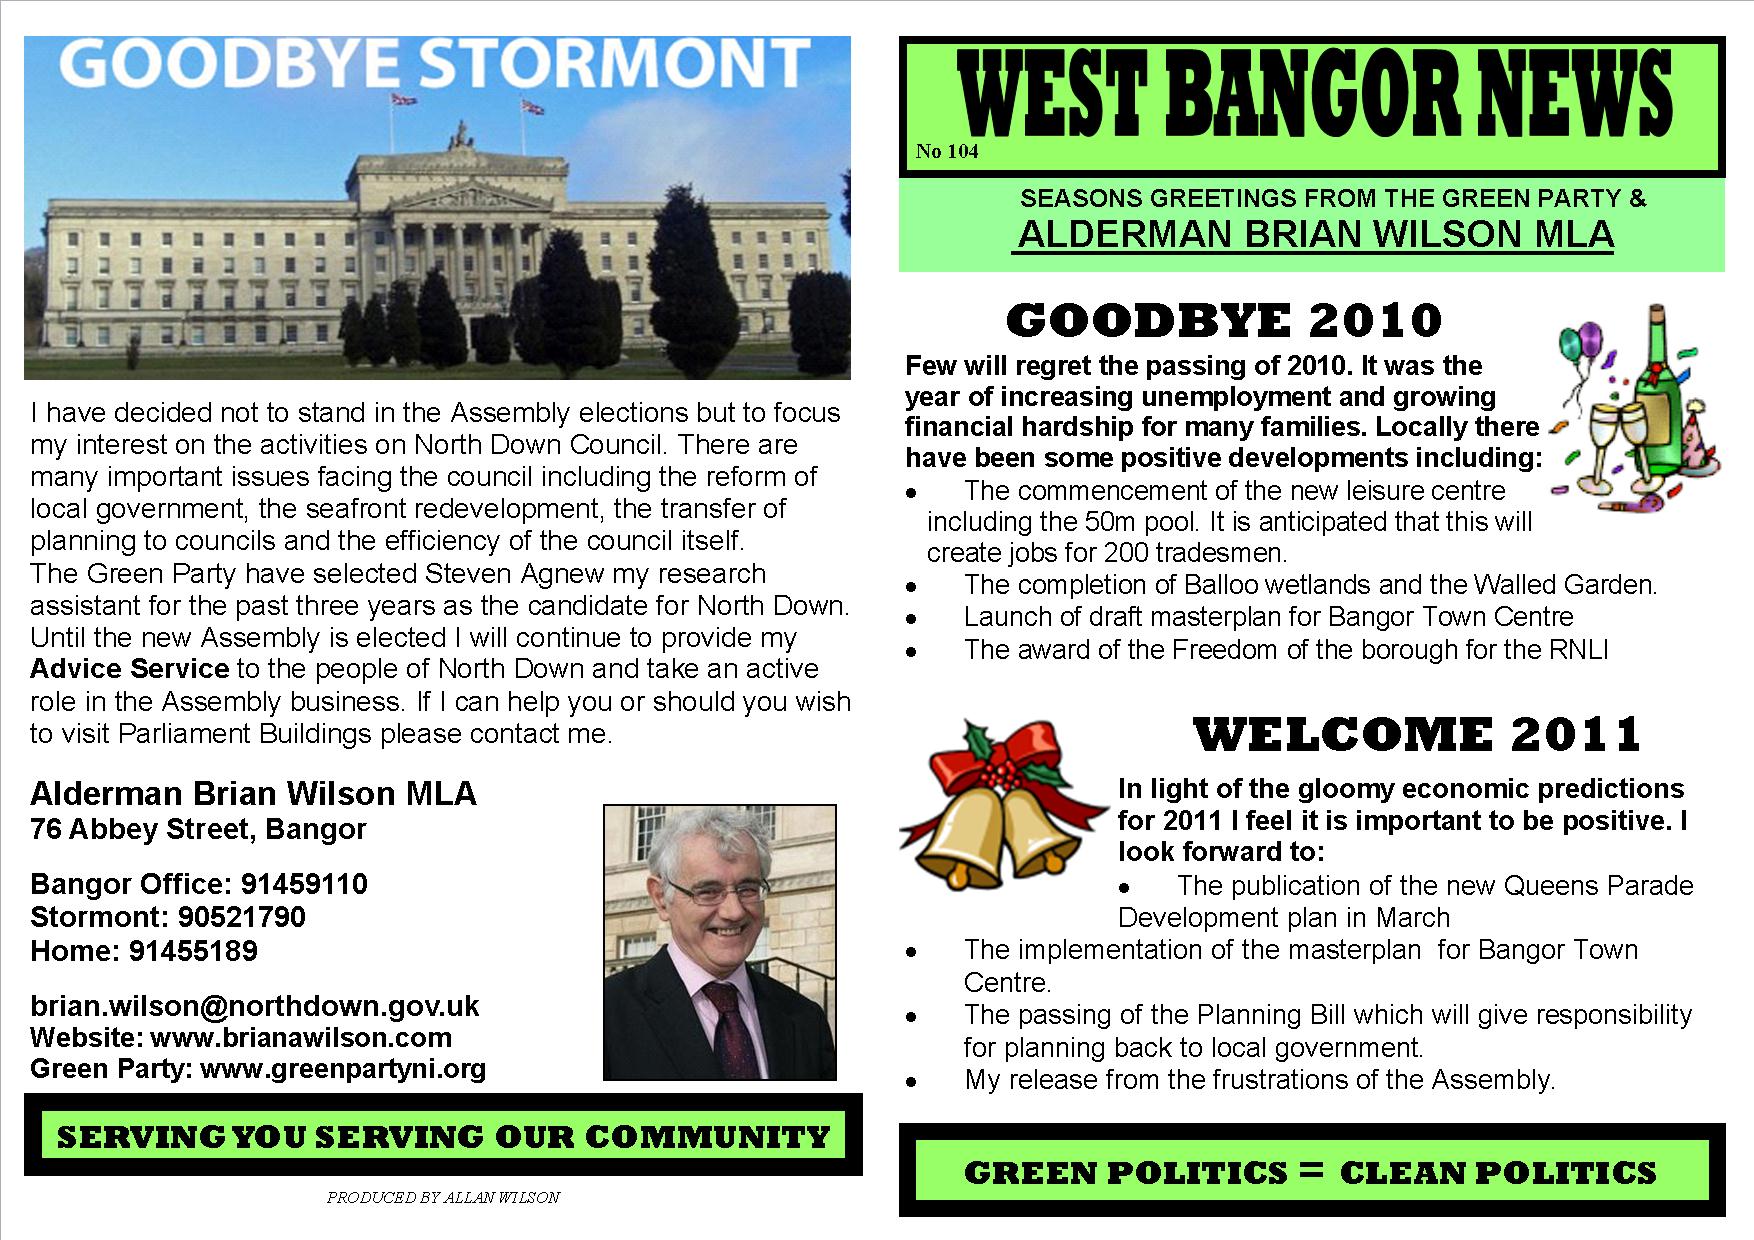 West Bangor News (104) – New Year 2011